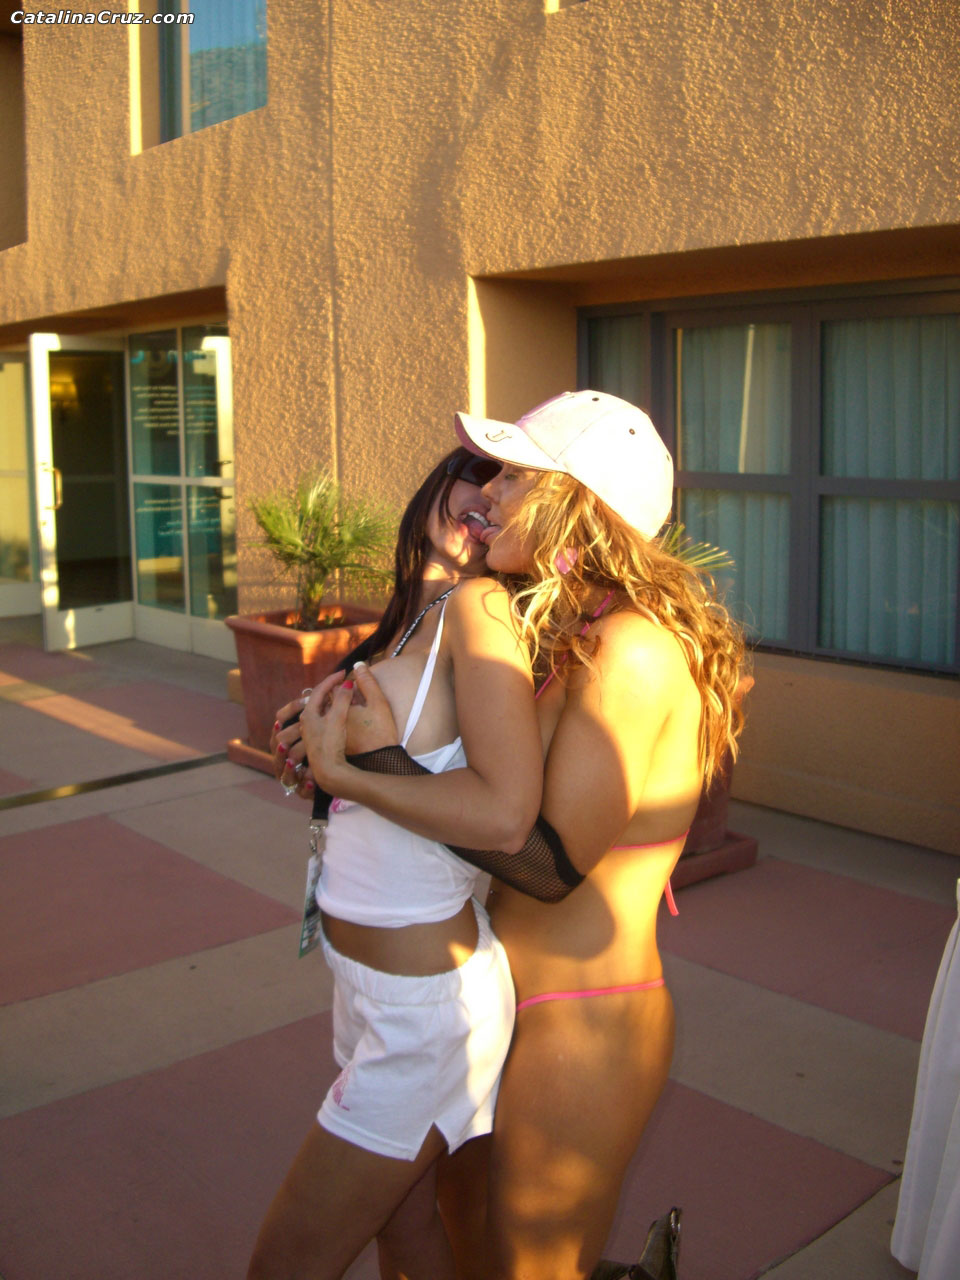 Hot pornstar Catalina Cruz poses with her friends & flashes her tits in public foto porno #425104896 | Catalina Cruz Pics, Catalina Cruz, Public, porno móvil